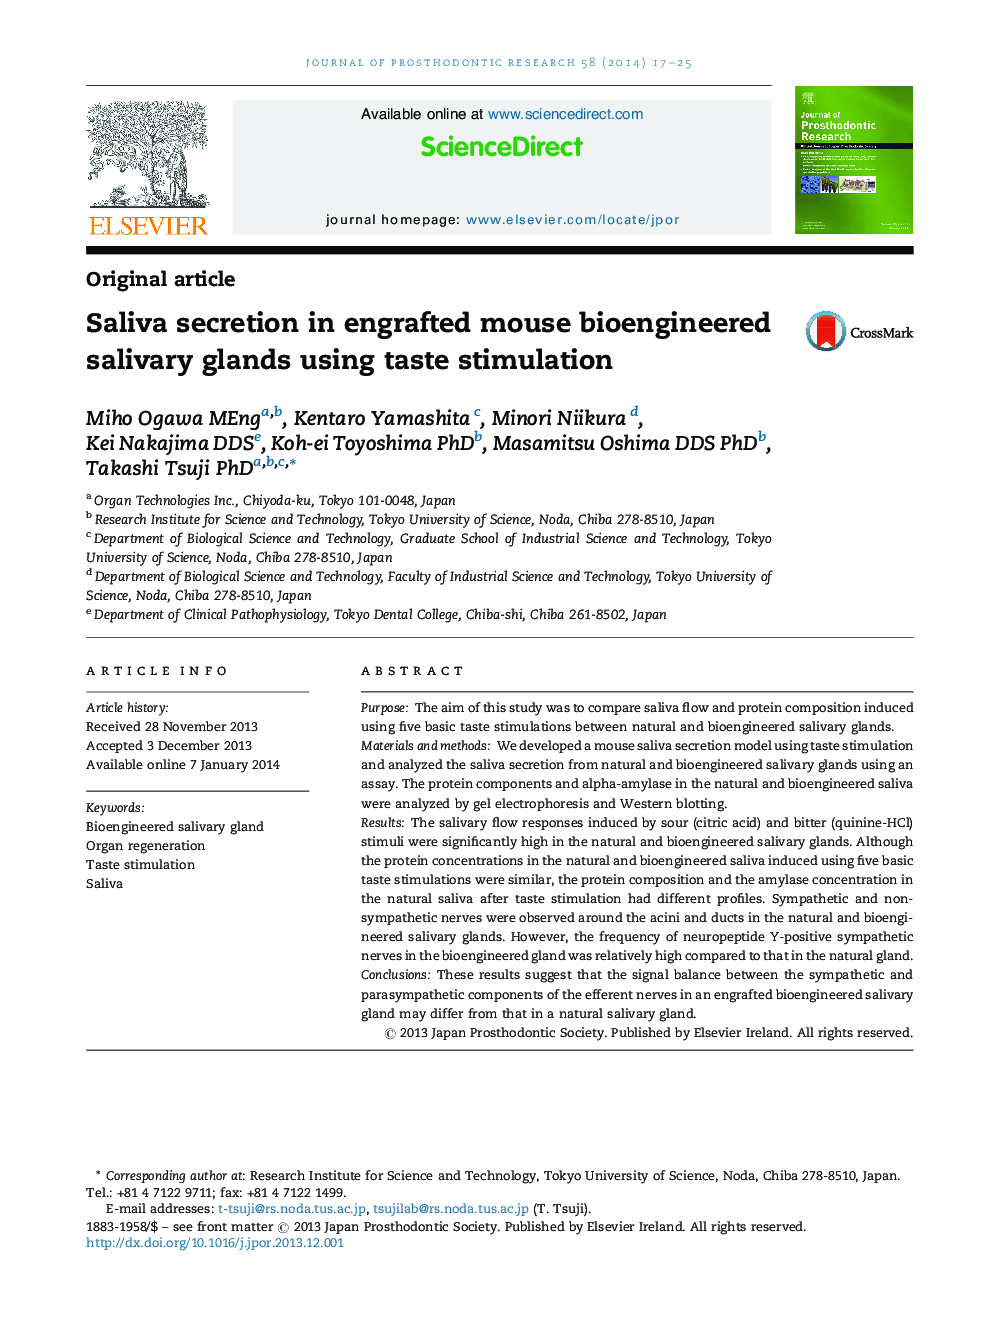 Saliva secretion in engrafted mouse bioengineered salivary glands using taste stimulation